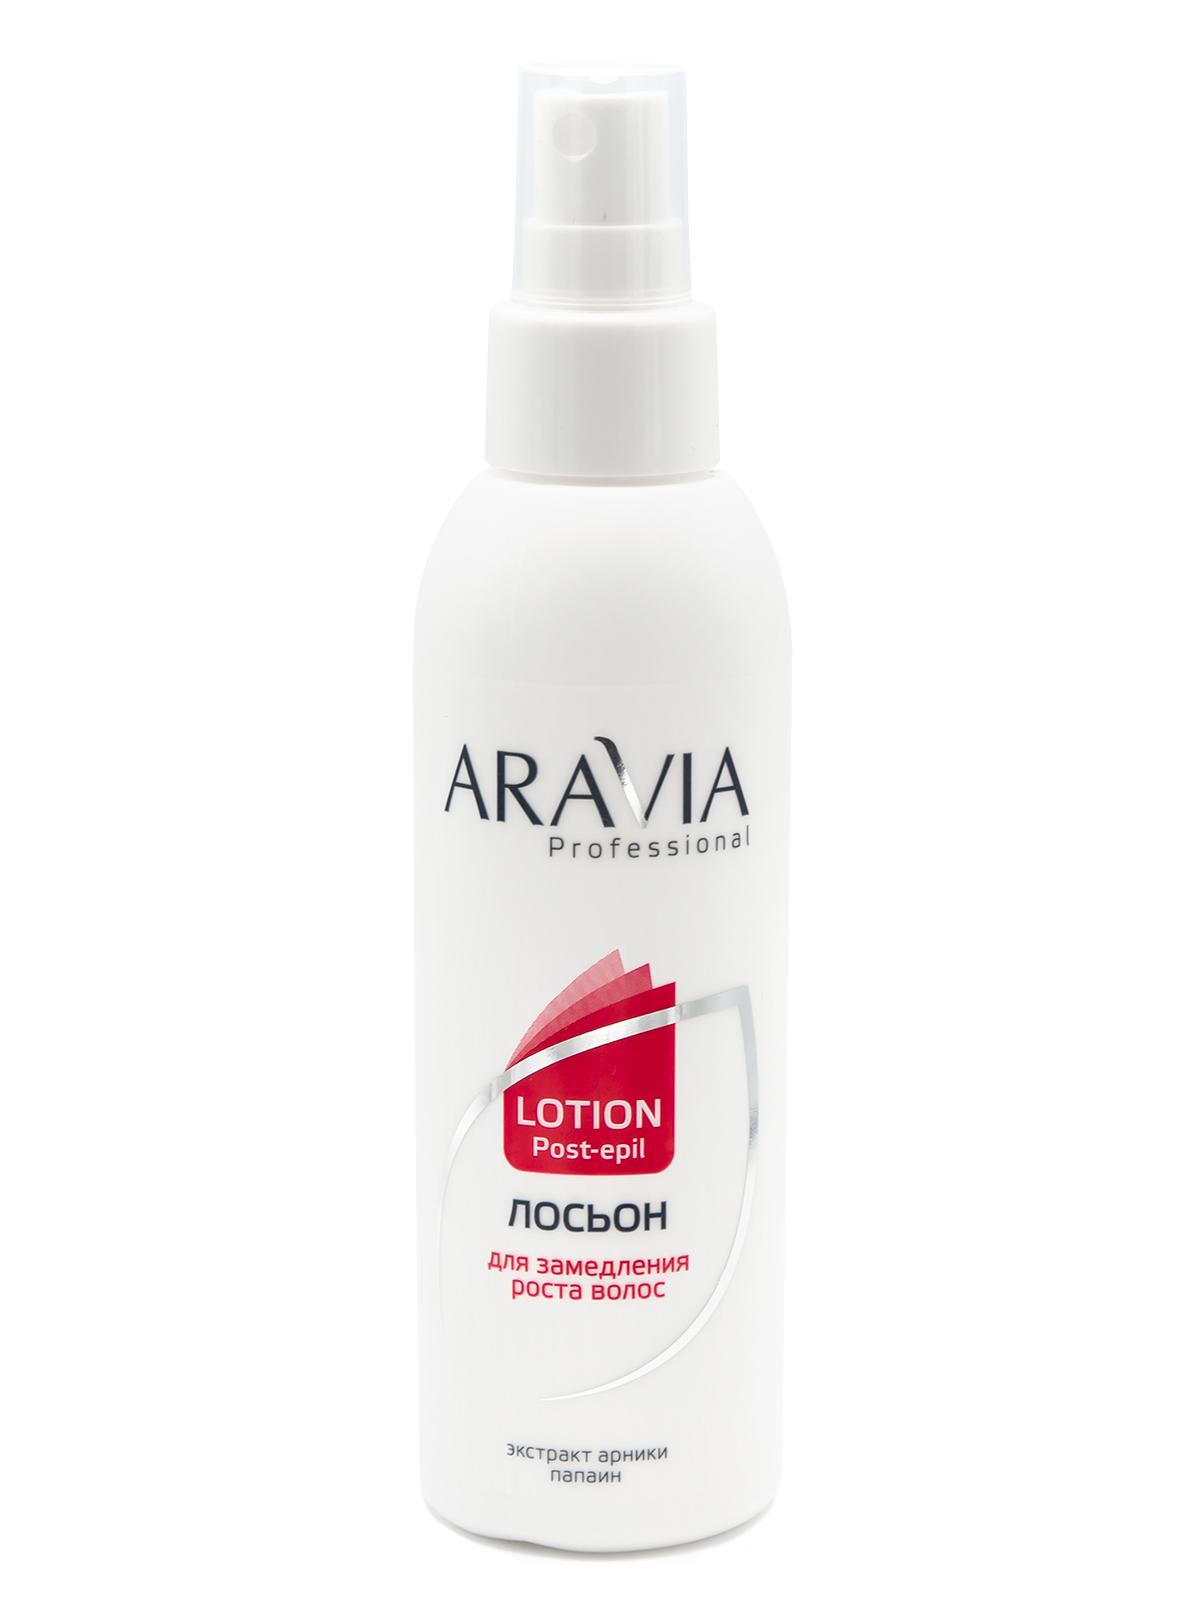 Aravia Professional Лосьон для замедления роста волос с арникой, 150 мл (Aravia Professional, Spa Депиляция) aravia professional лосьон для замедления роста волос 150 мл